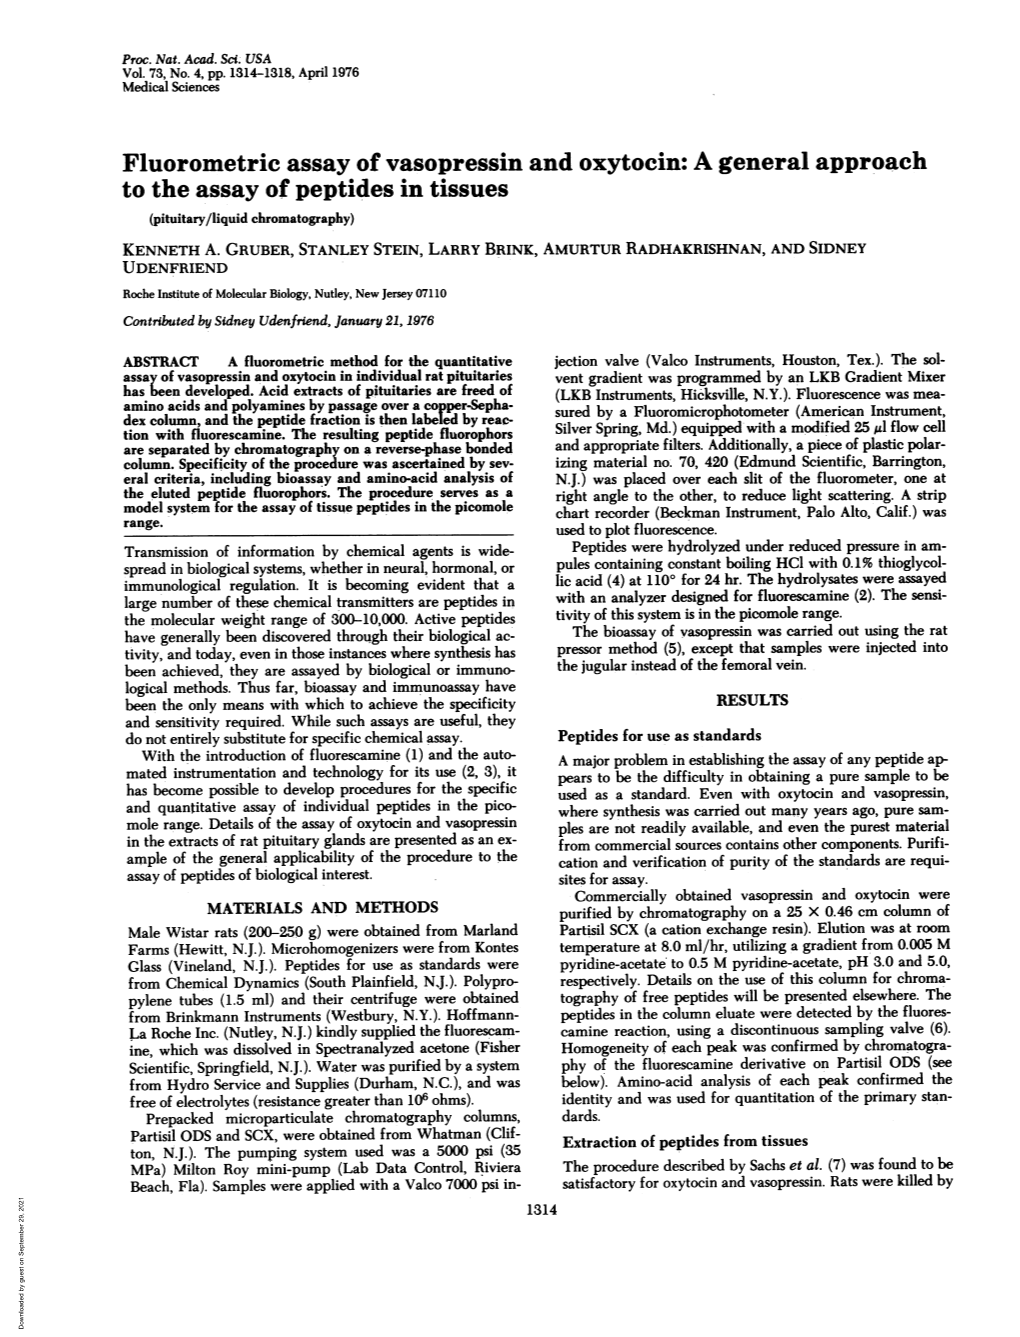 Fluorometric Assayof Vasopressin and Oxytocin